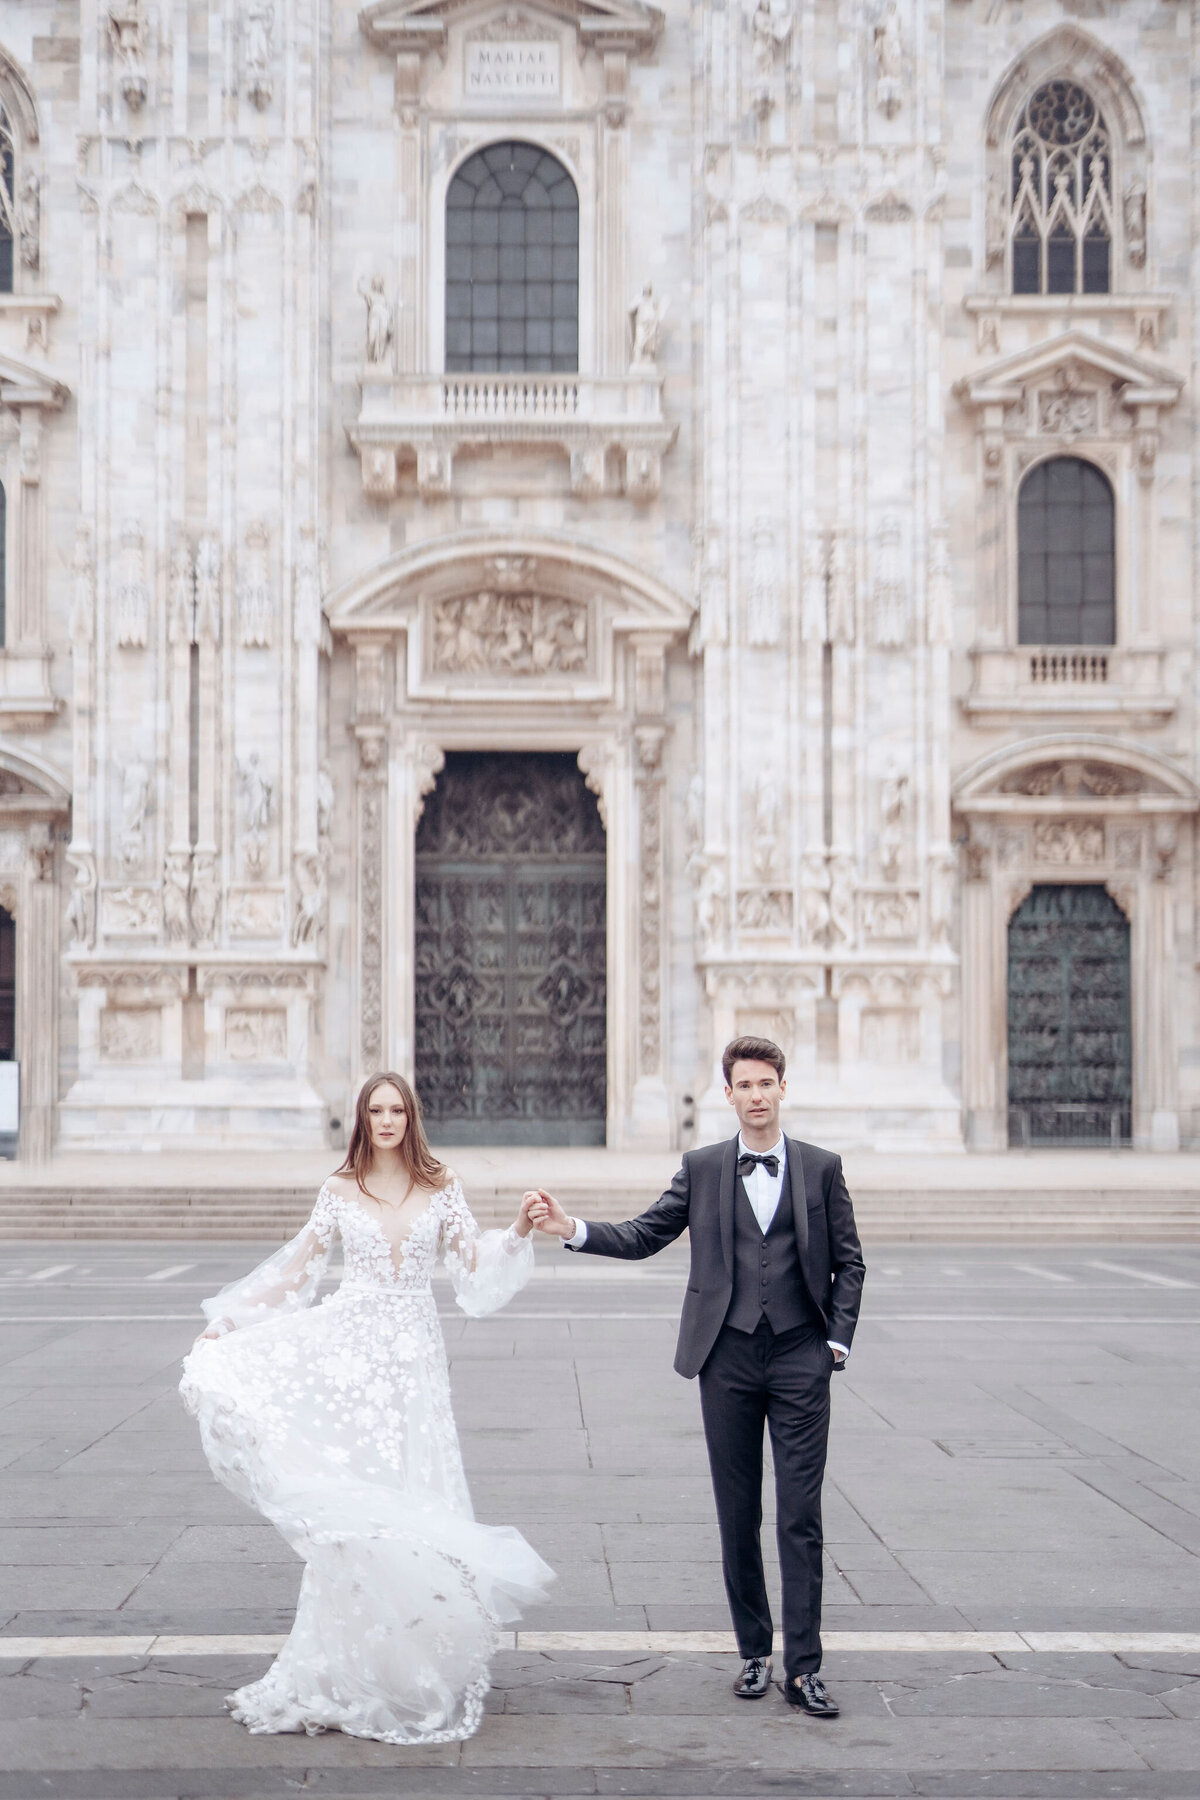 006-Milan-Duomo-Inspiration-Love-Story Elopement-Cinematic-Romance-Destination-Wedding-Editorial-Luxury-Fine-Art-Lisa-Vigliotta-Photography